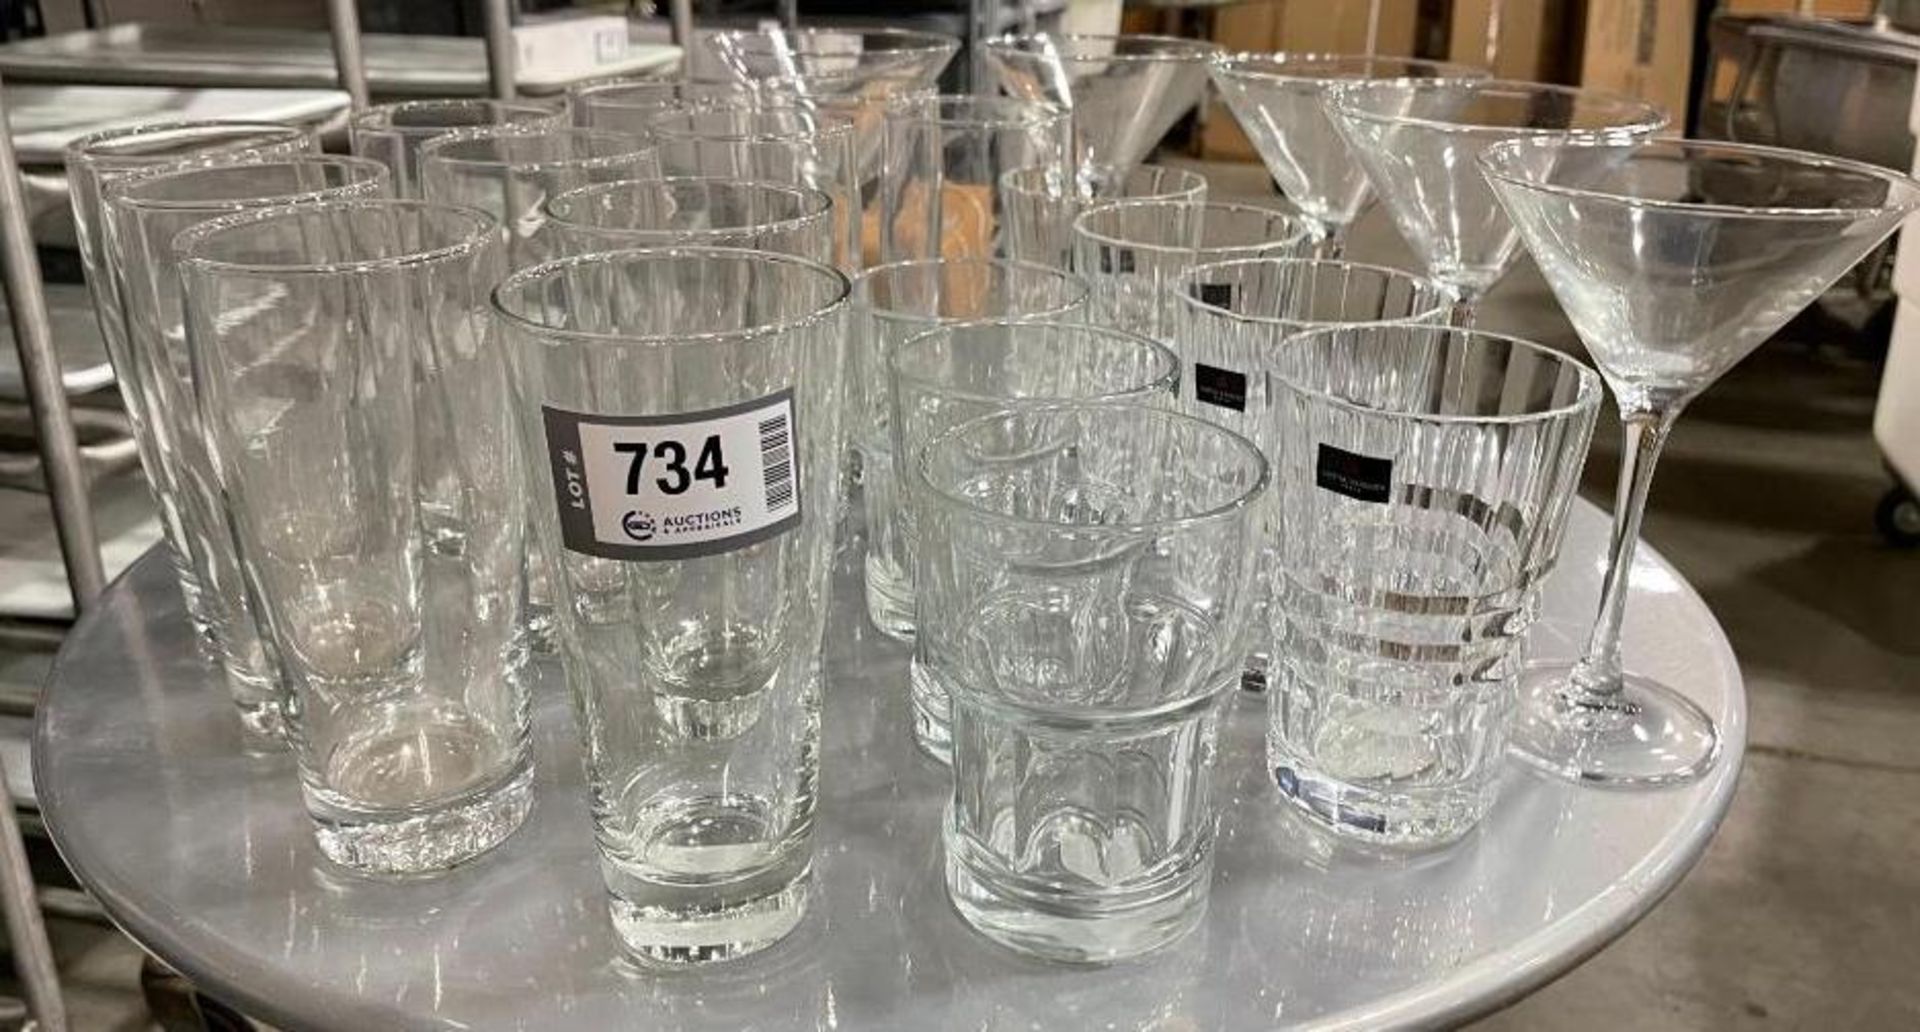 20 PIECES OF ASSORTED GLASSWARE